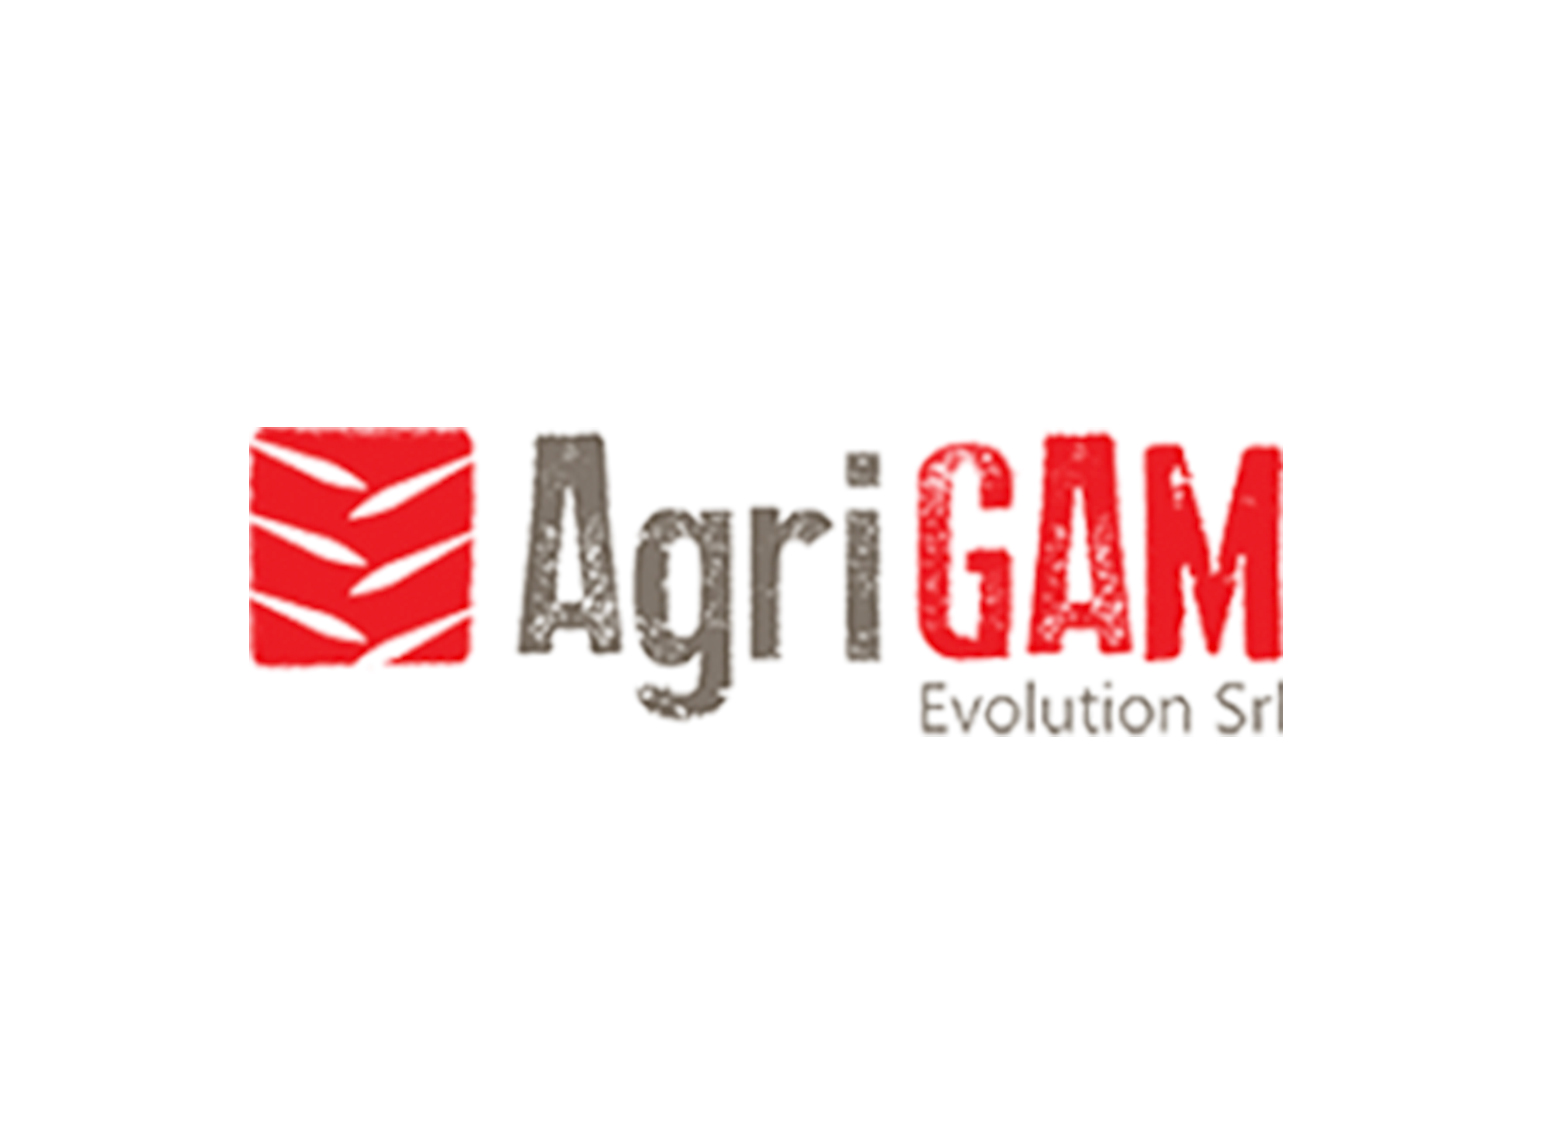 AGRI GAM EVOLUTION SRL